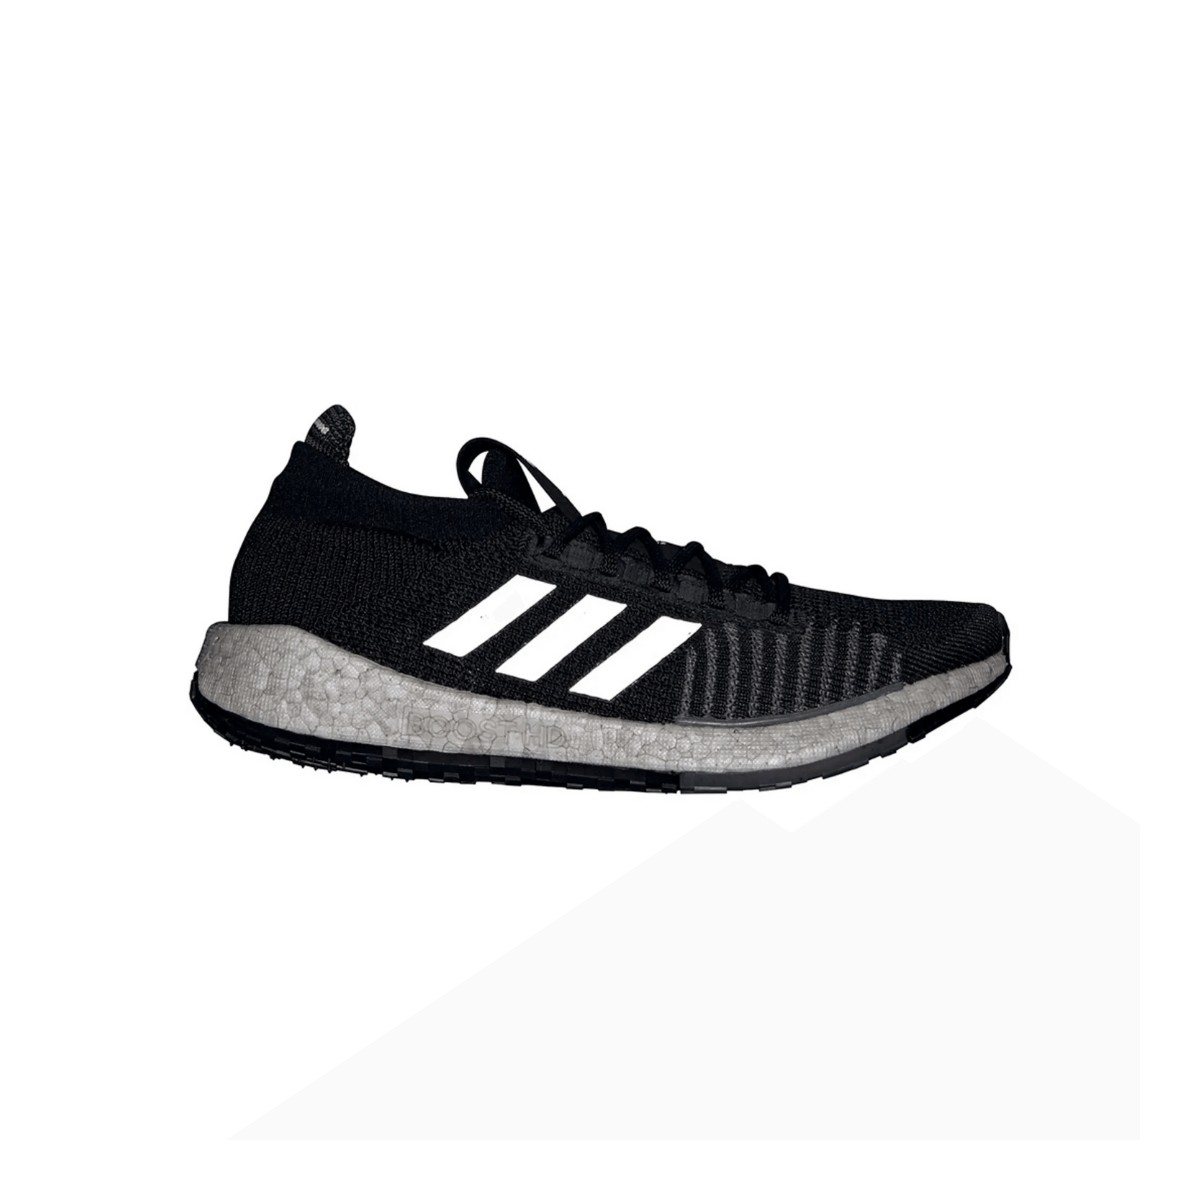 Adidas Pulseboost Chaussures Noir